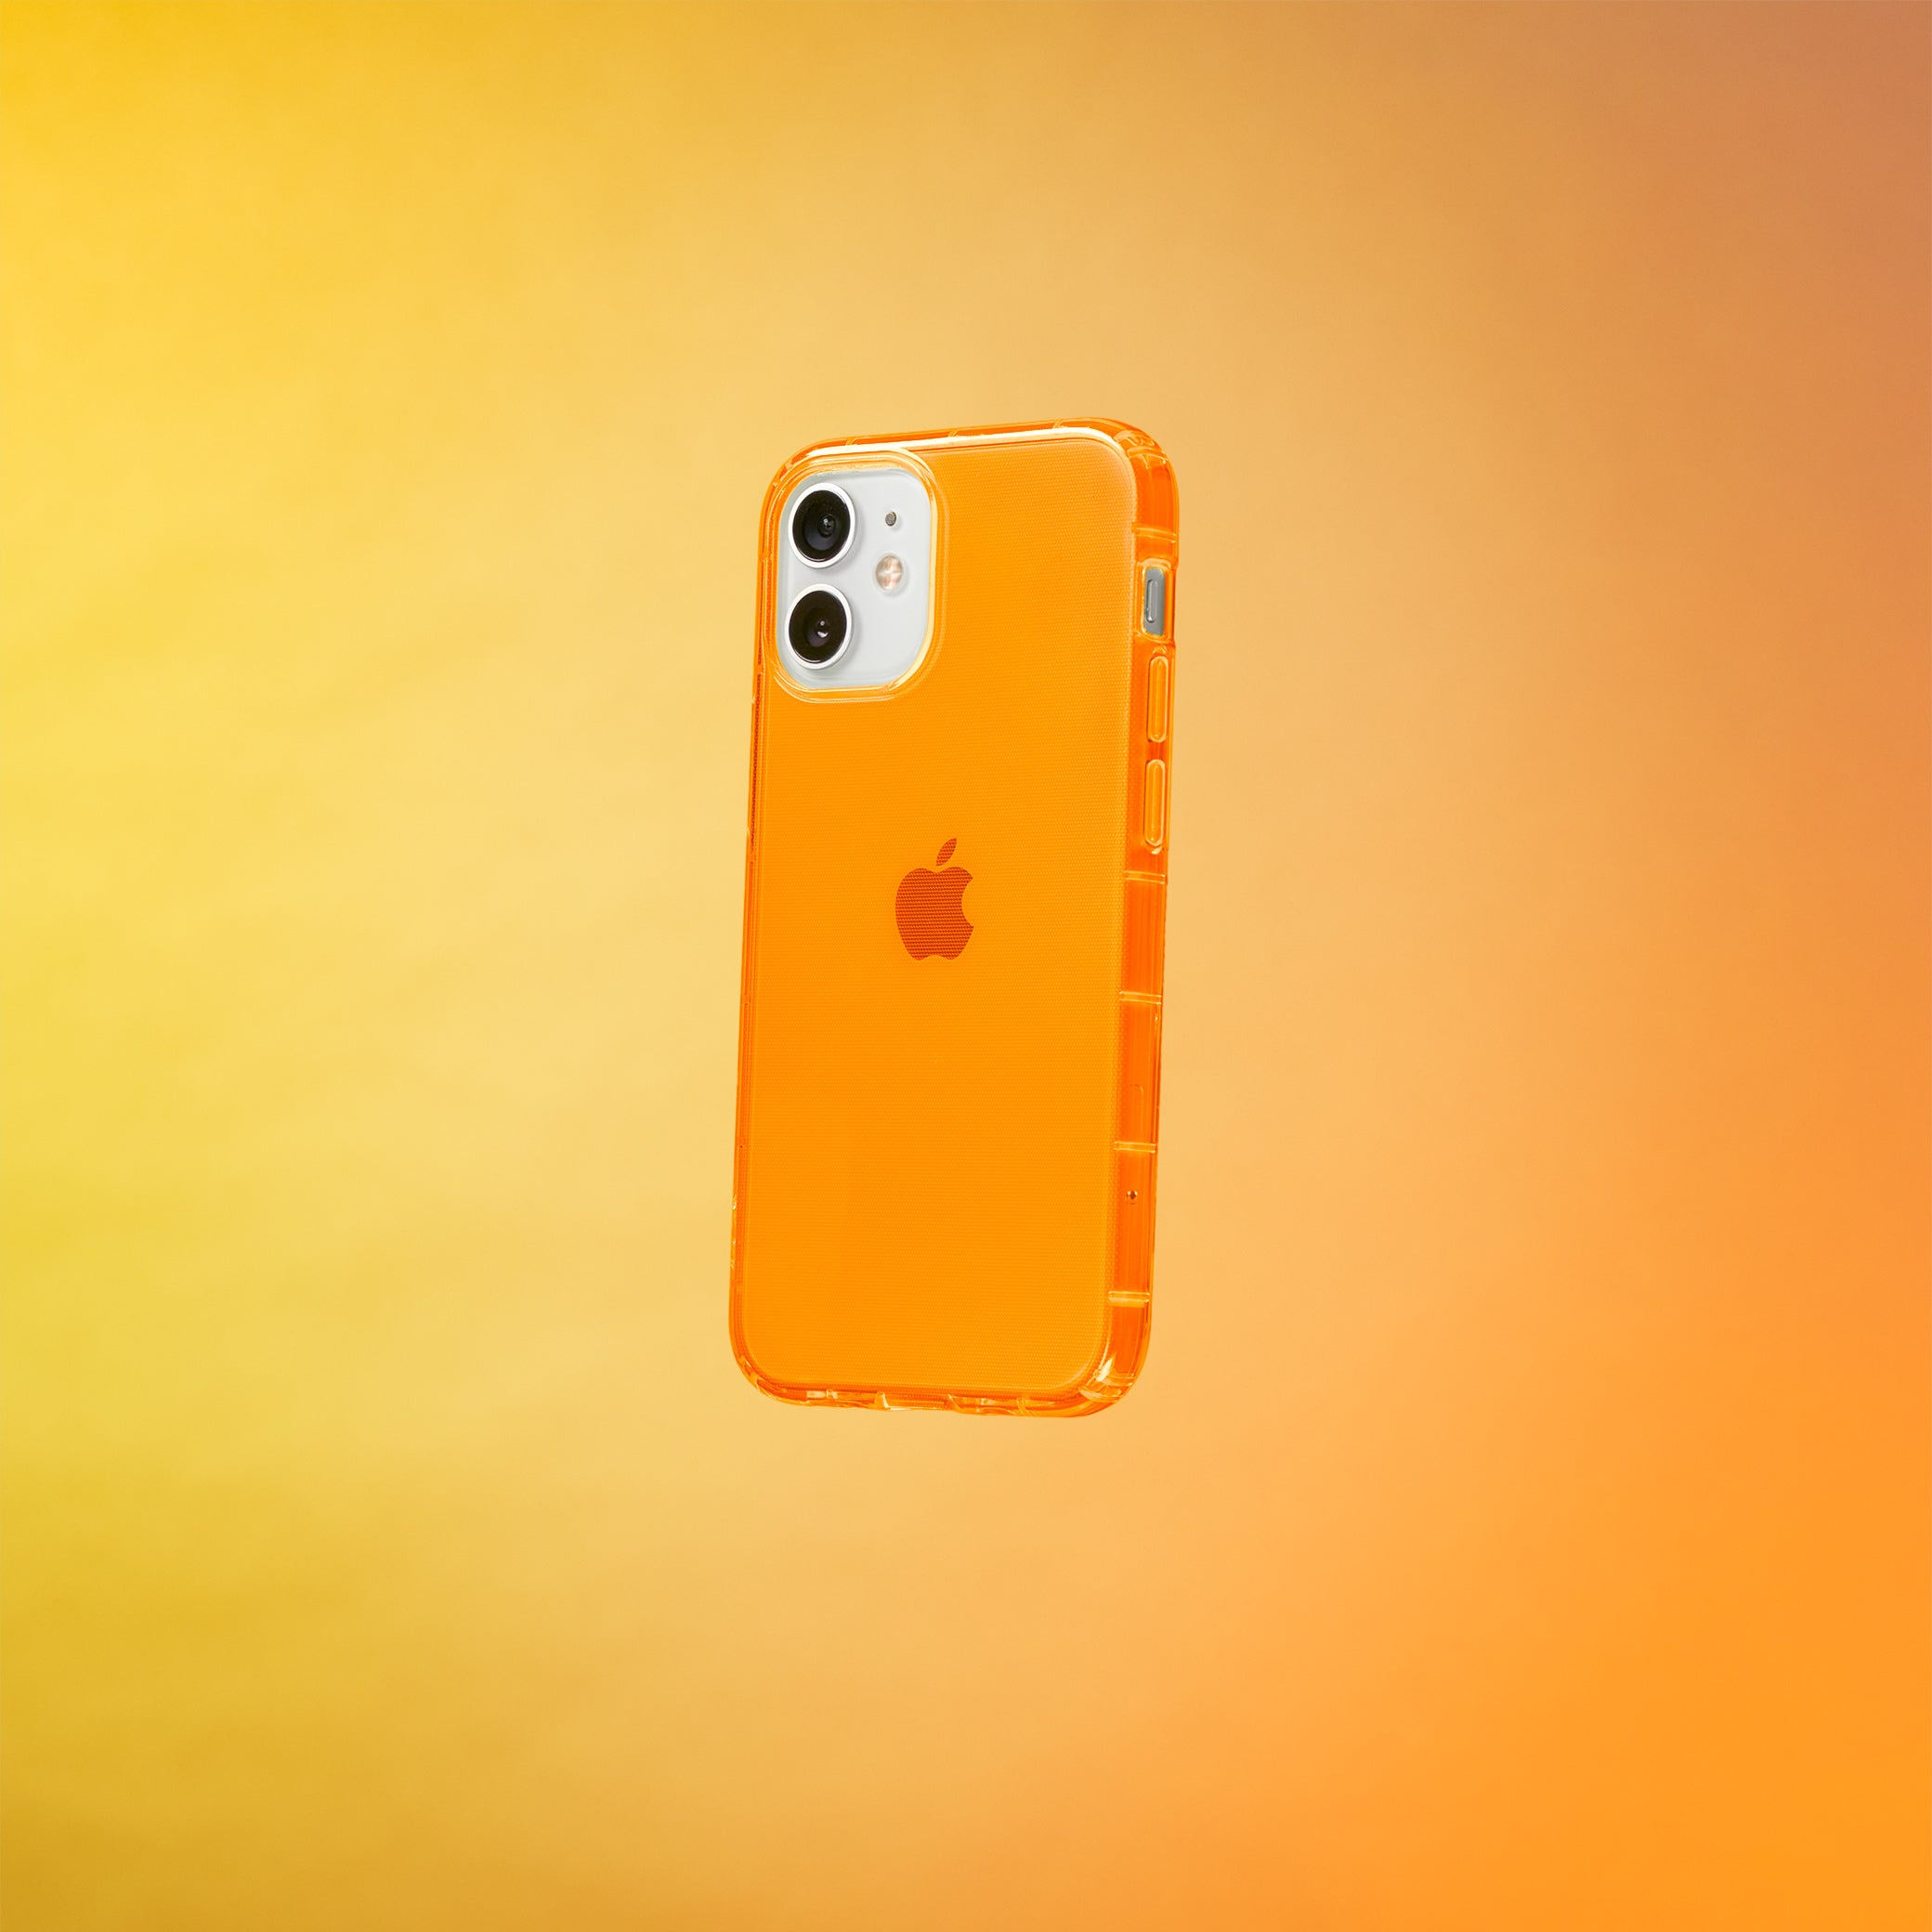 Highlighter Case for iPhone 12 Mini - Intense Bright Orange